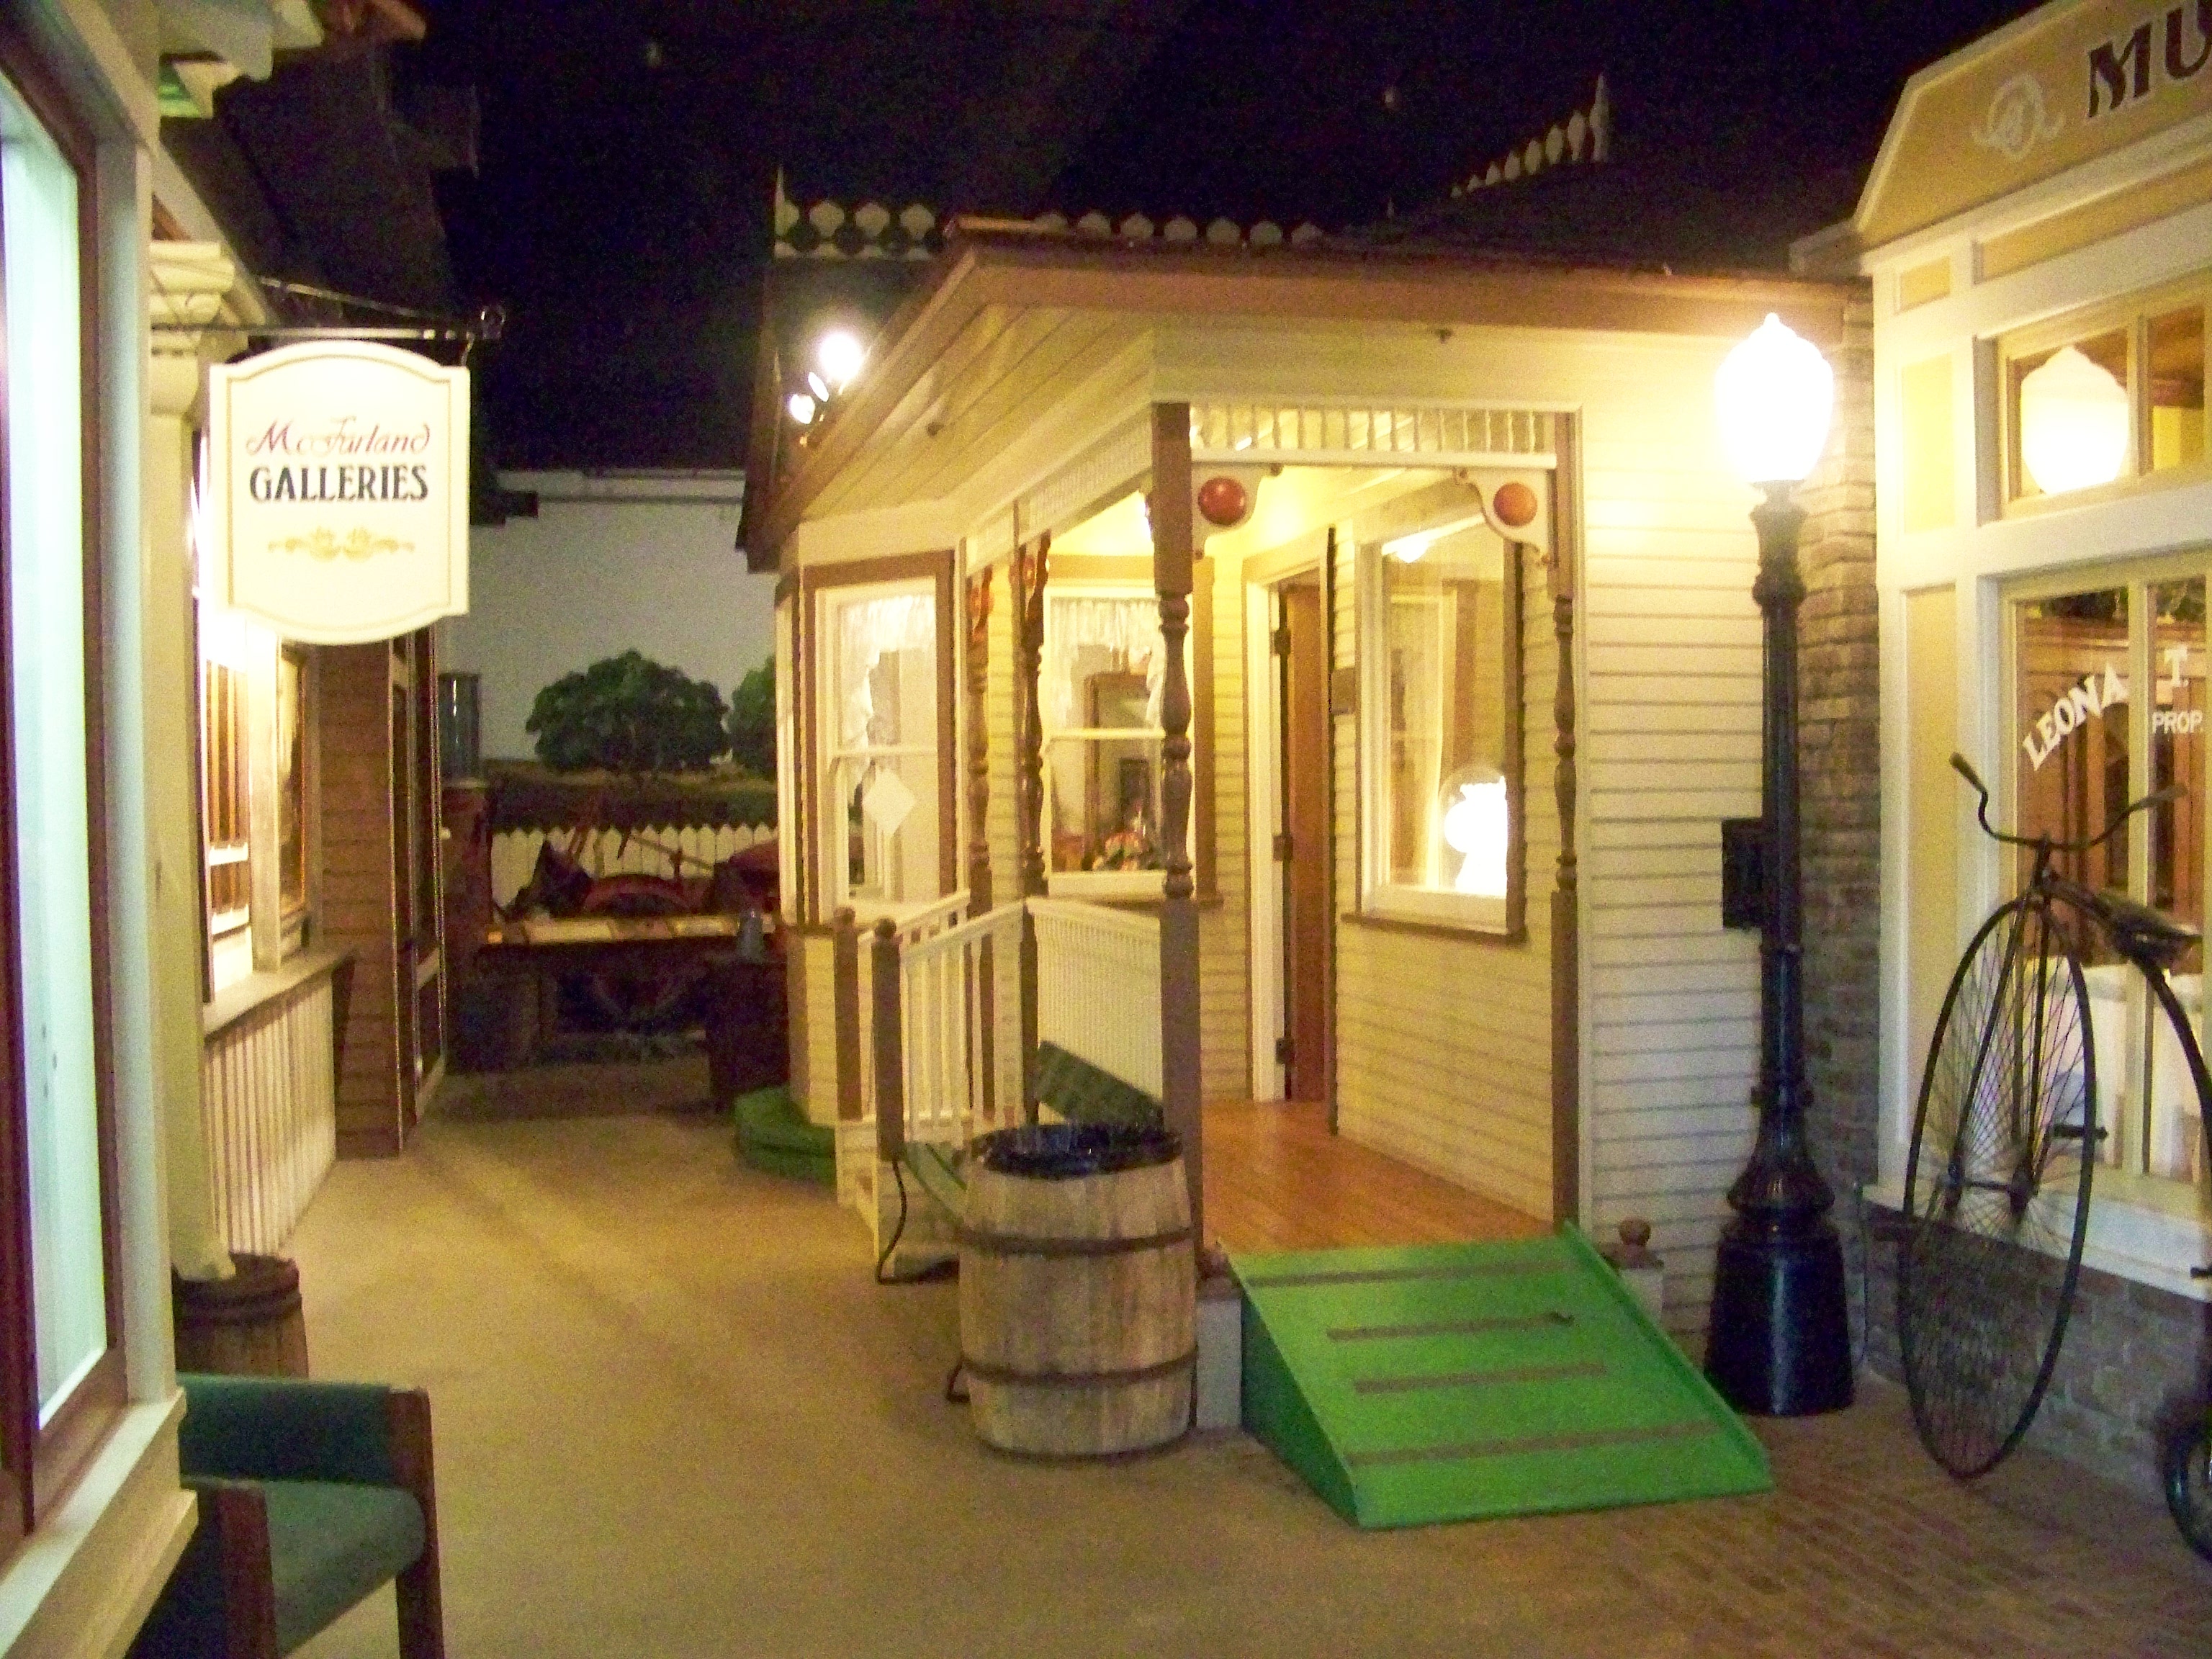 Inside of museum entrance